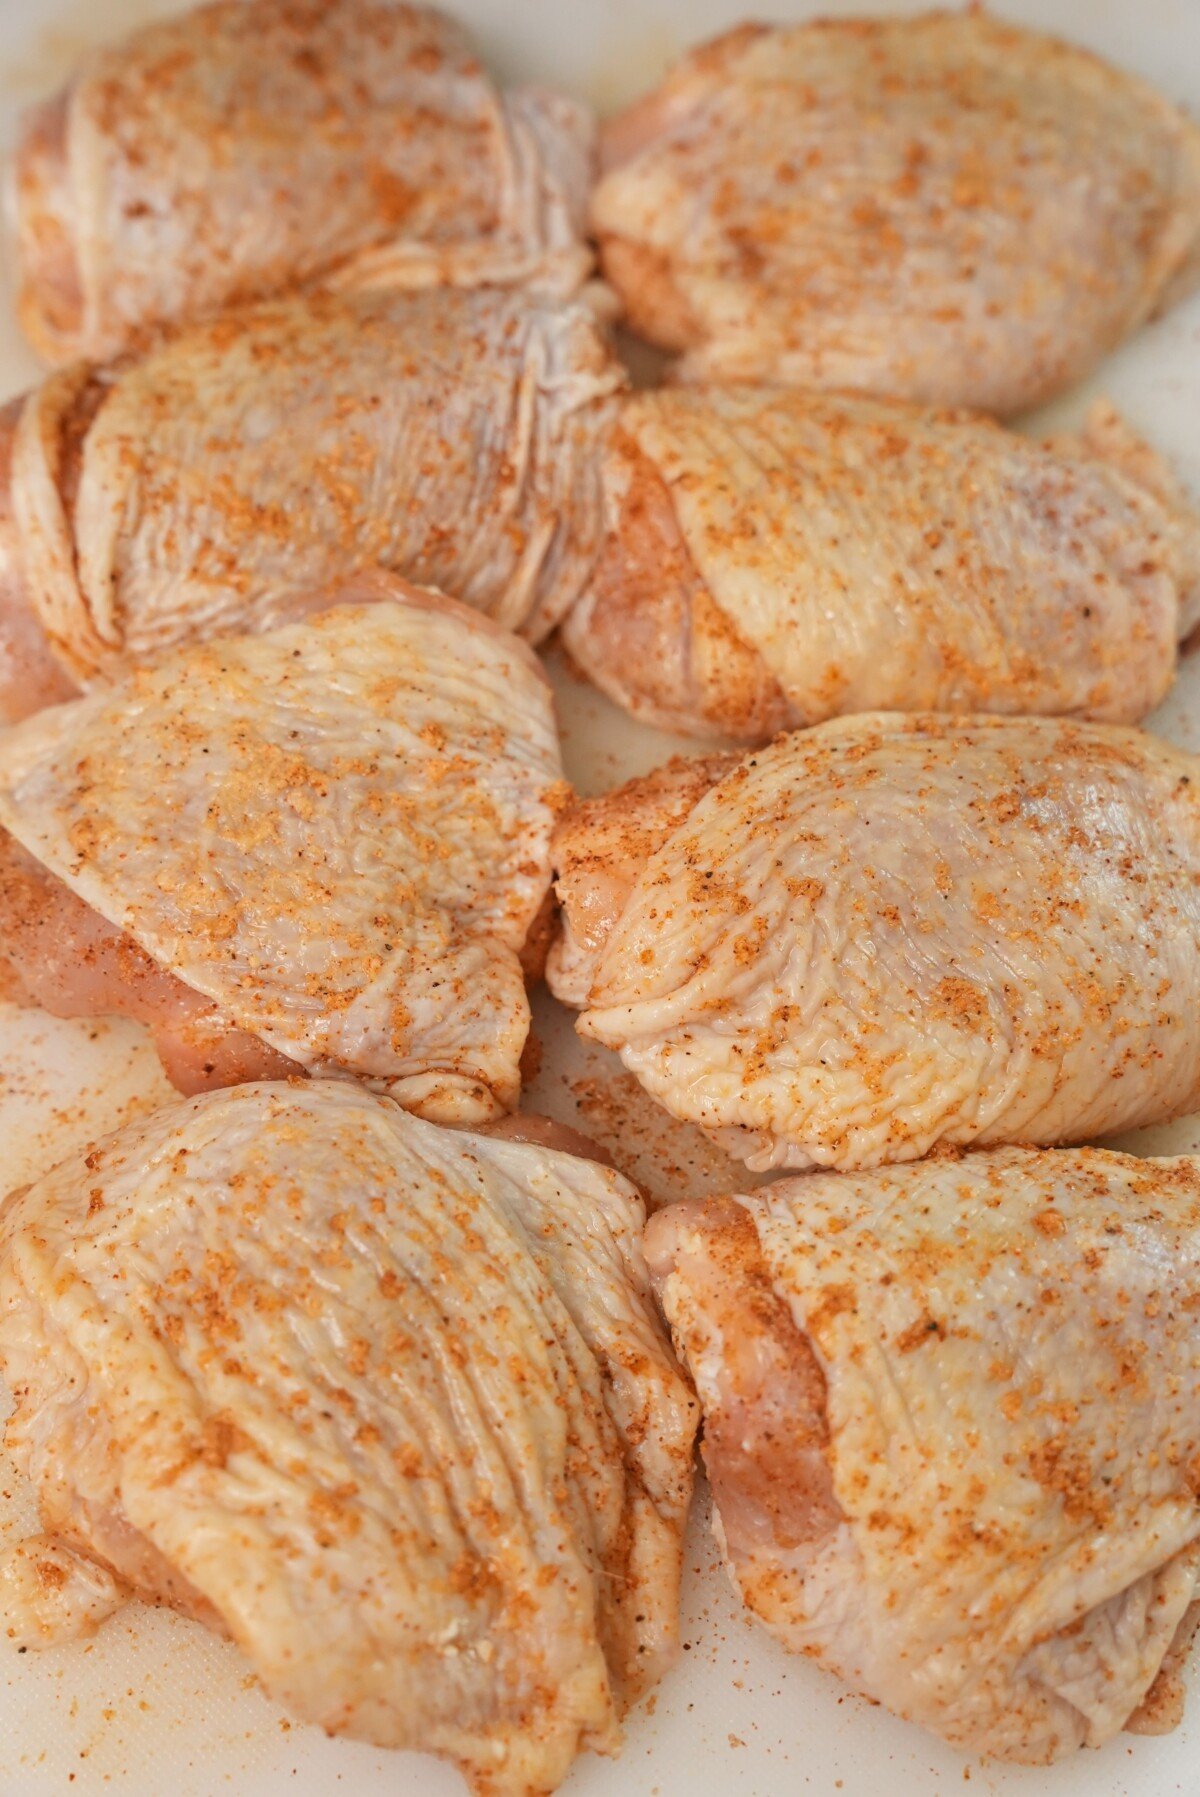 Fully seasoned chicken thighs on a cutting board.